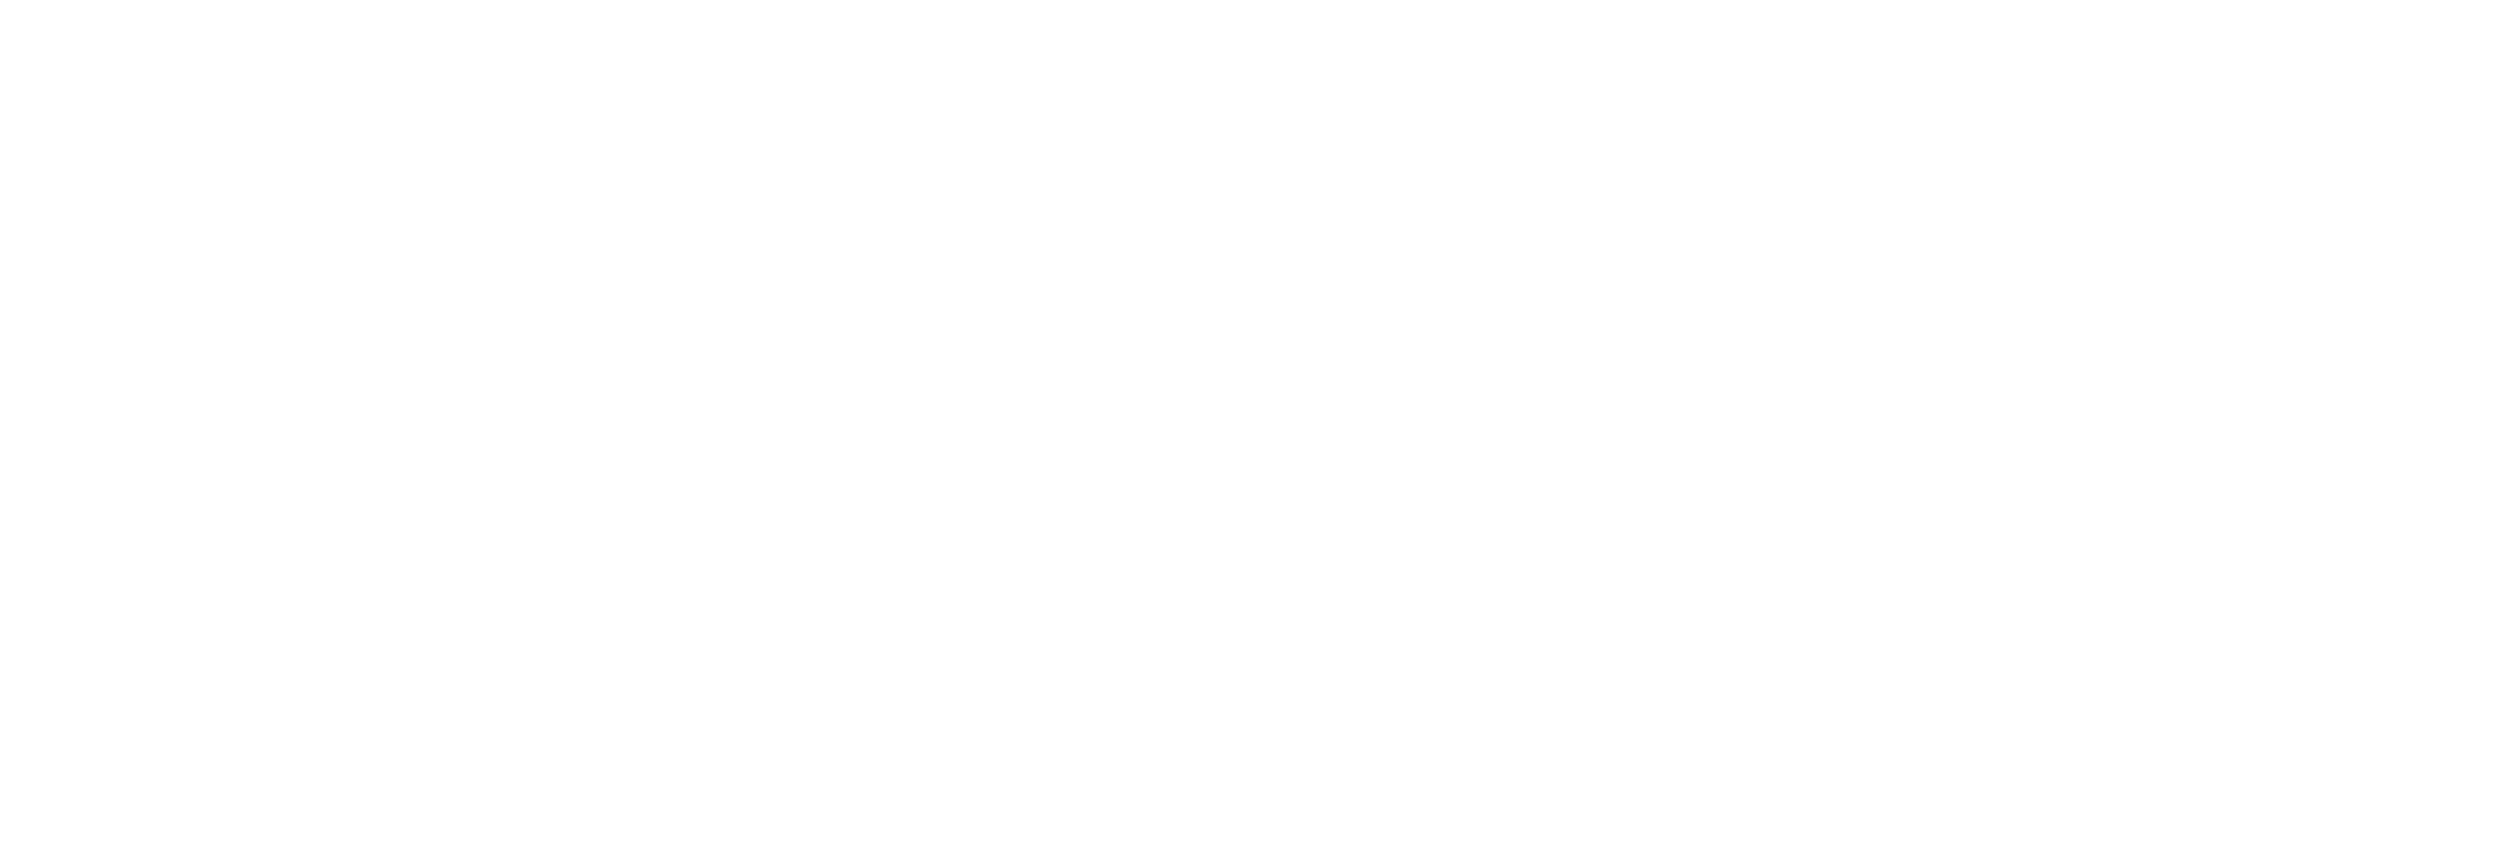 NZ Police